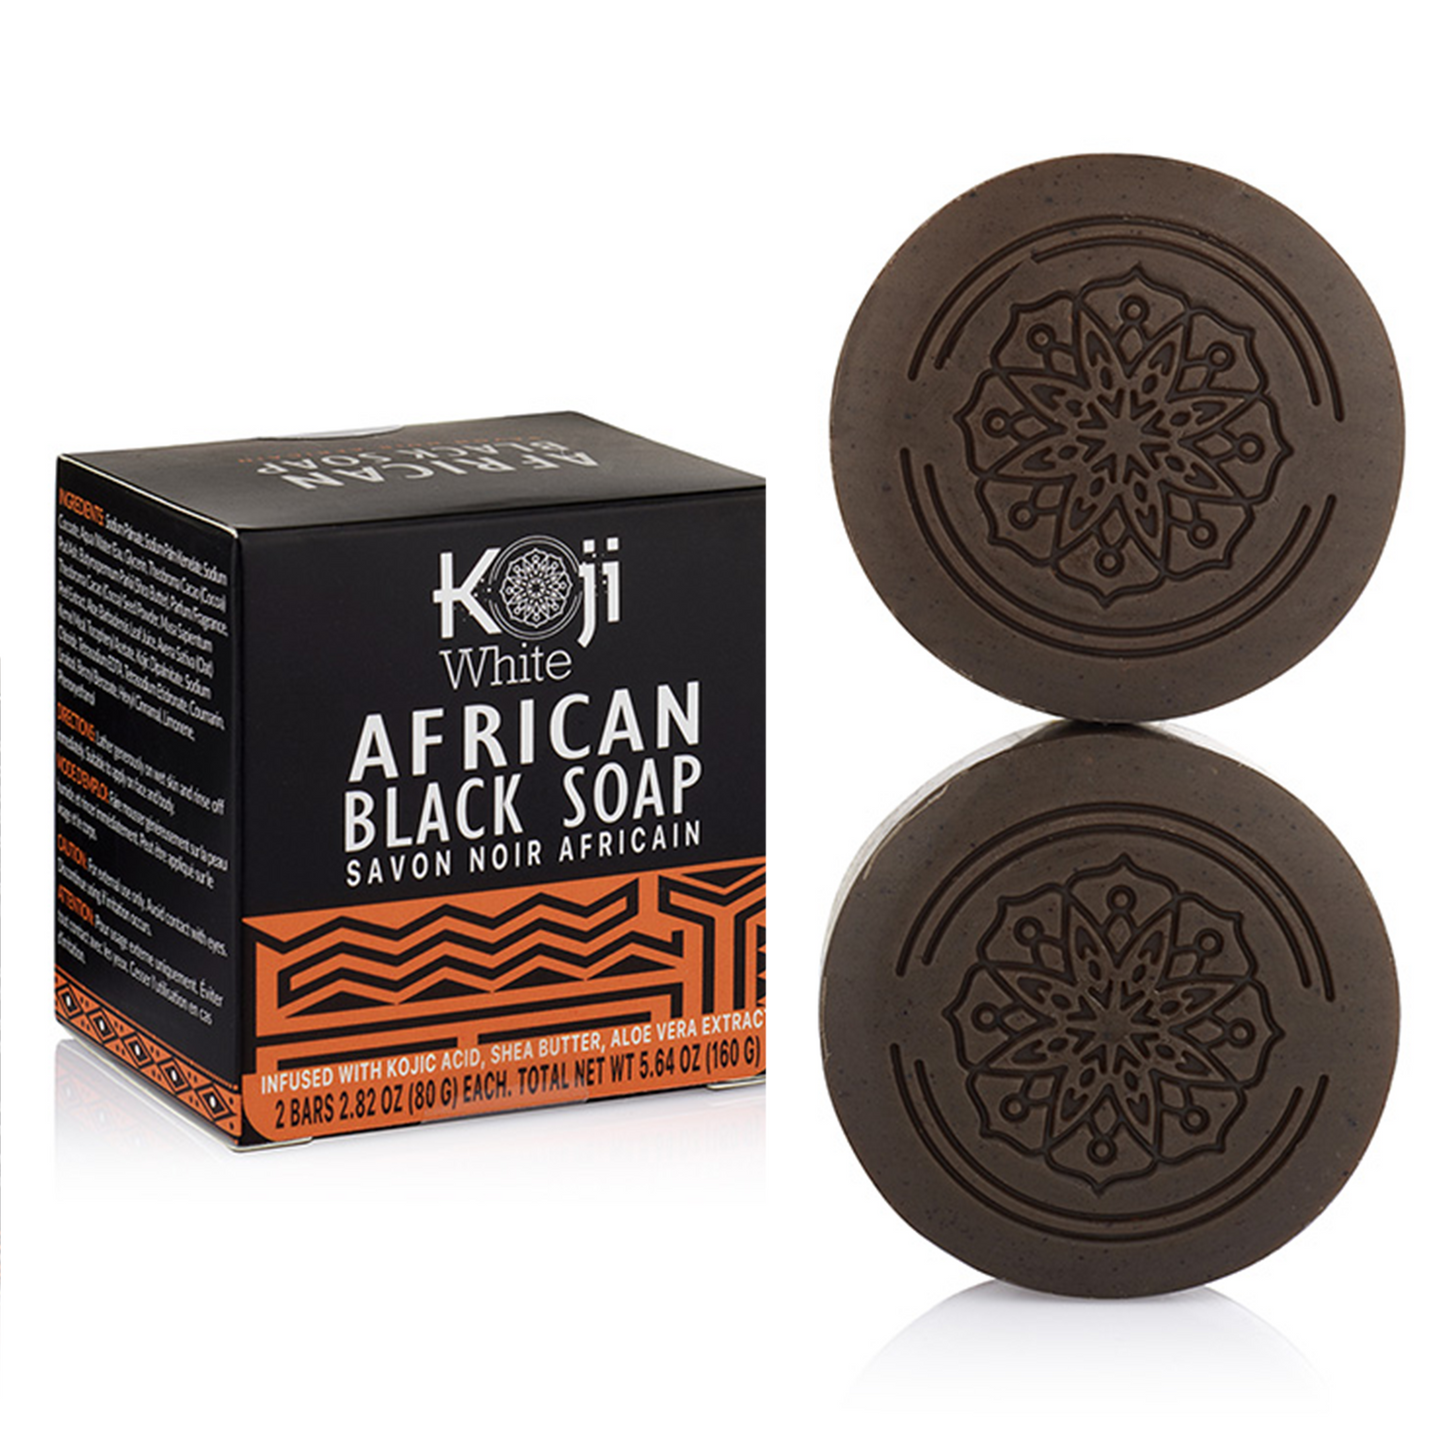 Koji White African Black Soap Bar (2 Bars)